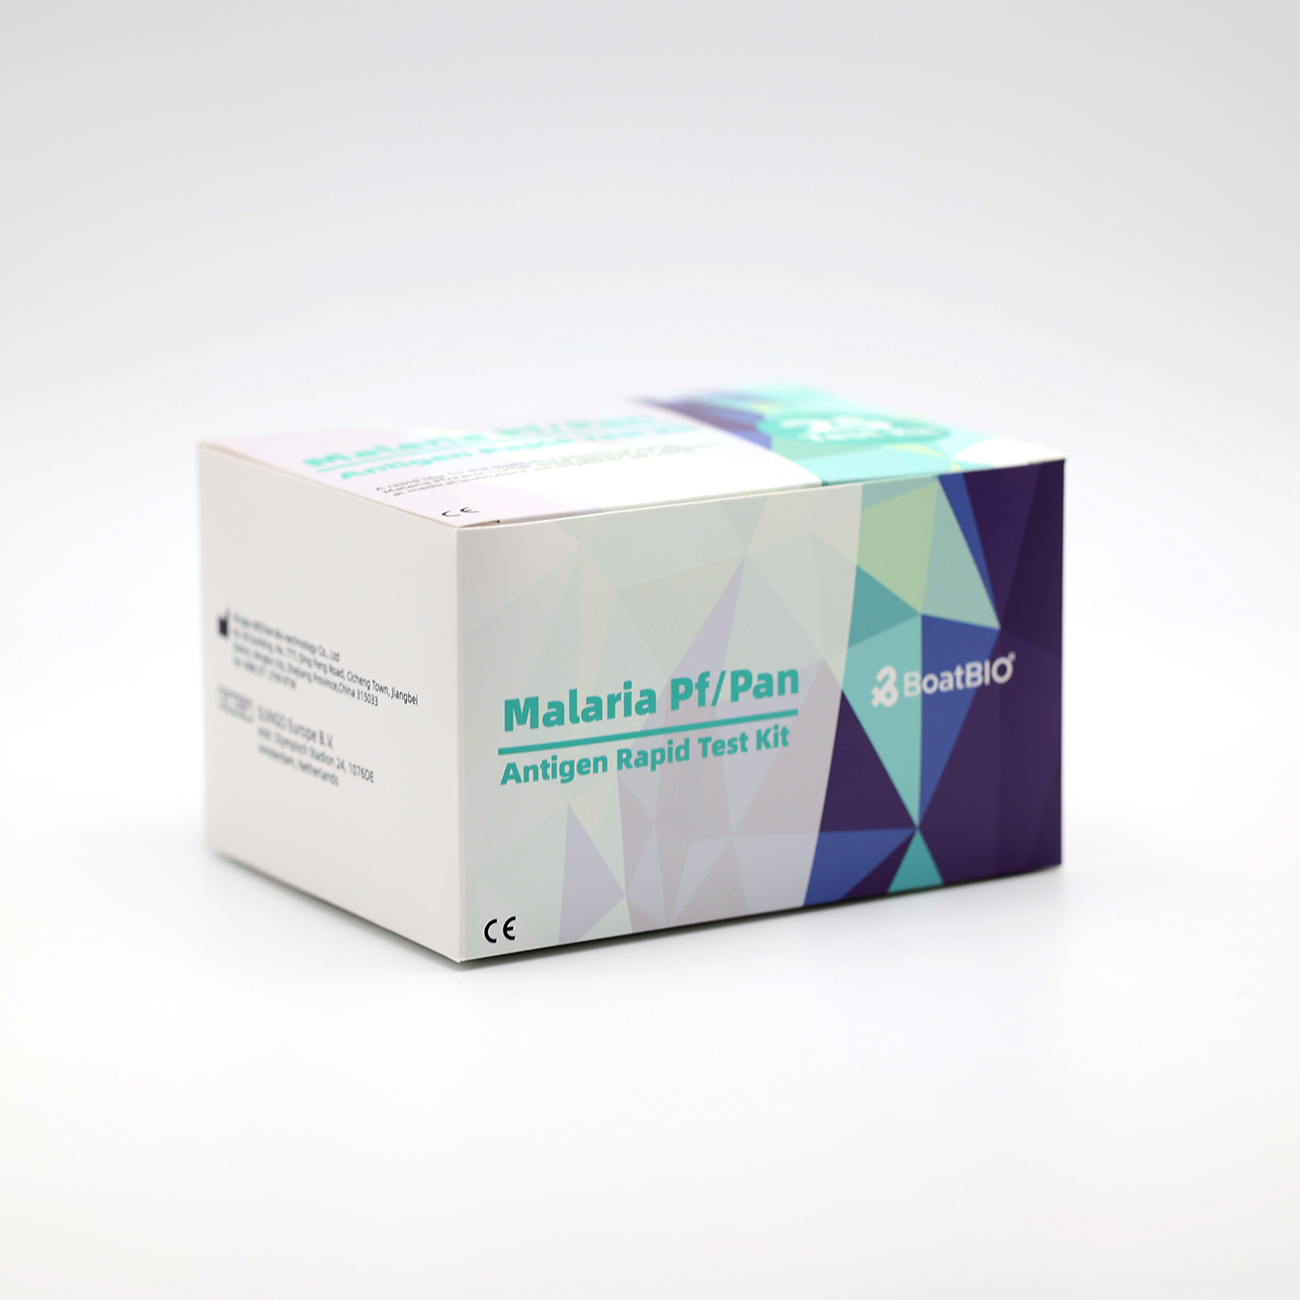 Malaria Pf/Pan Antigen Rapid Test kit (Colloidal Gold)